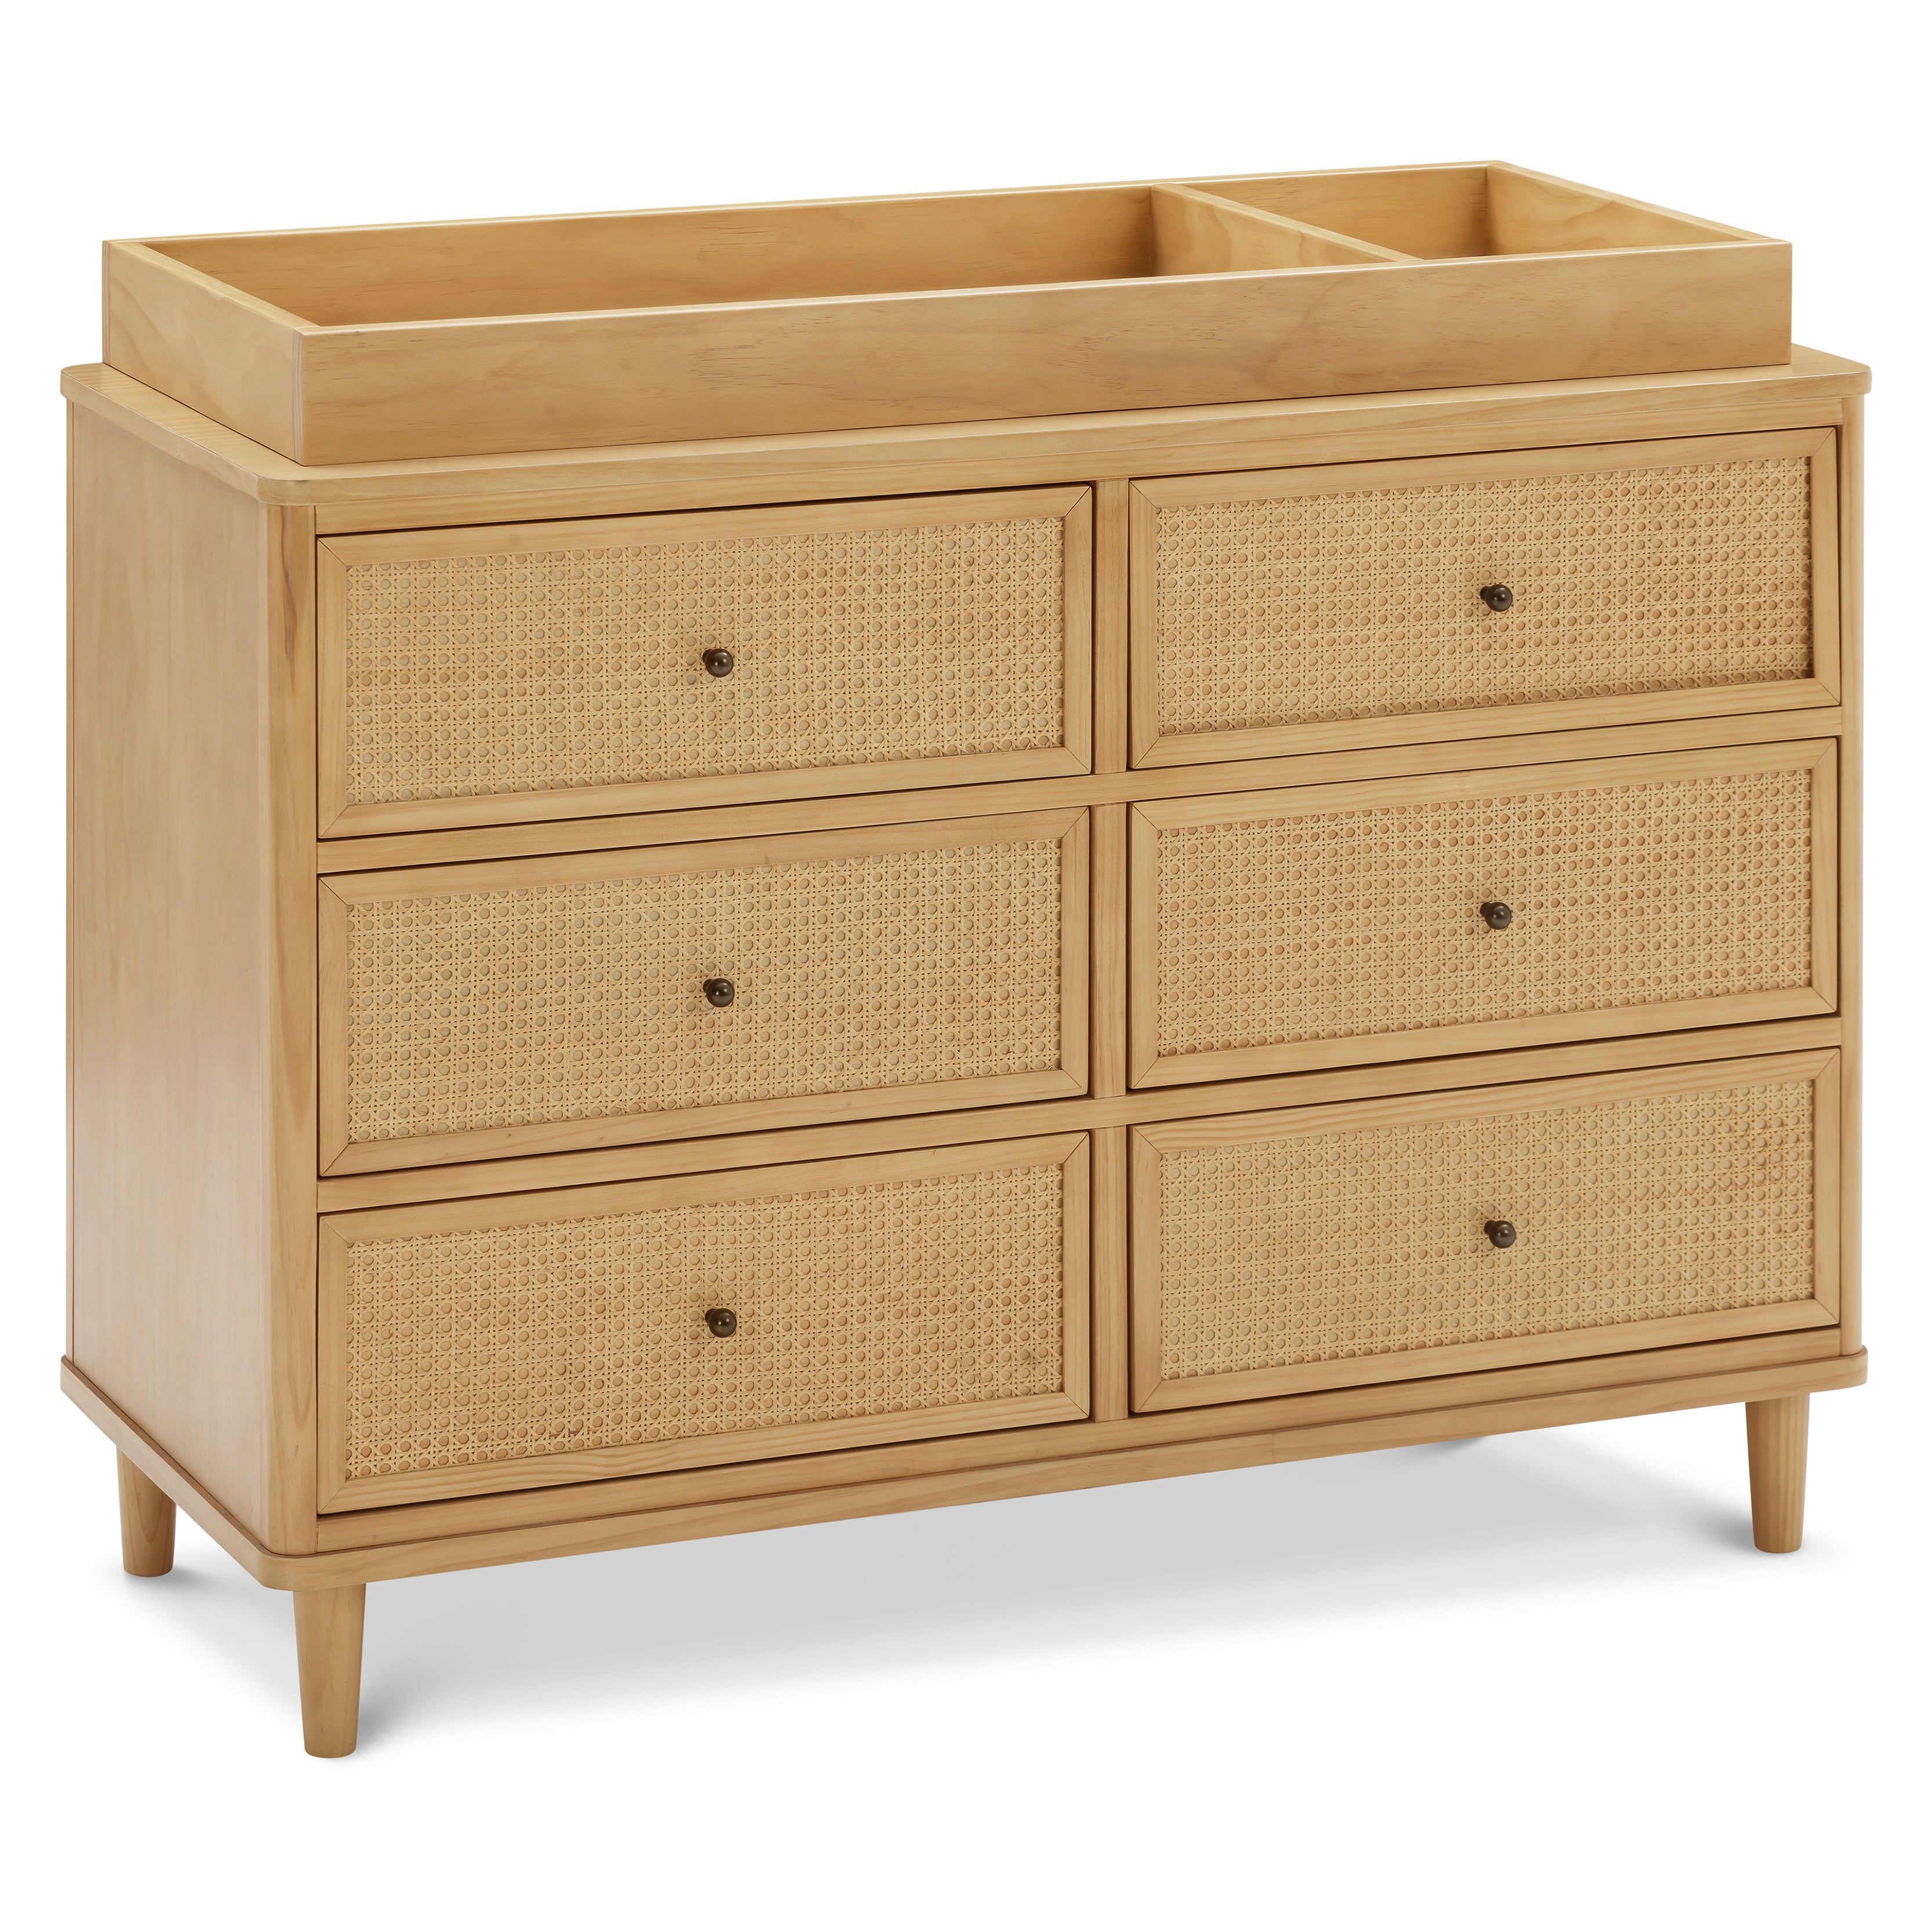 Namesake Marin with Cane 6-Drawer Assembled Dresser